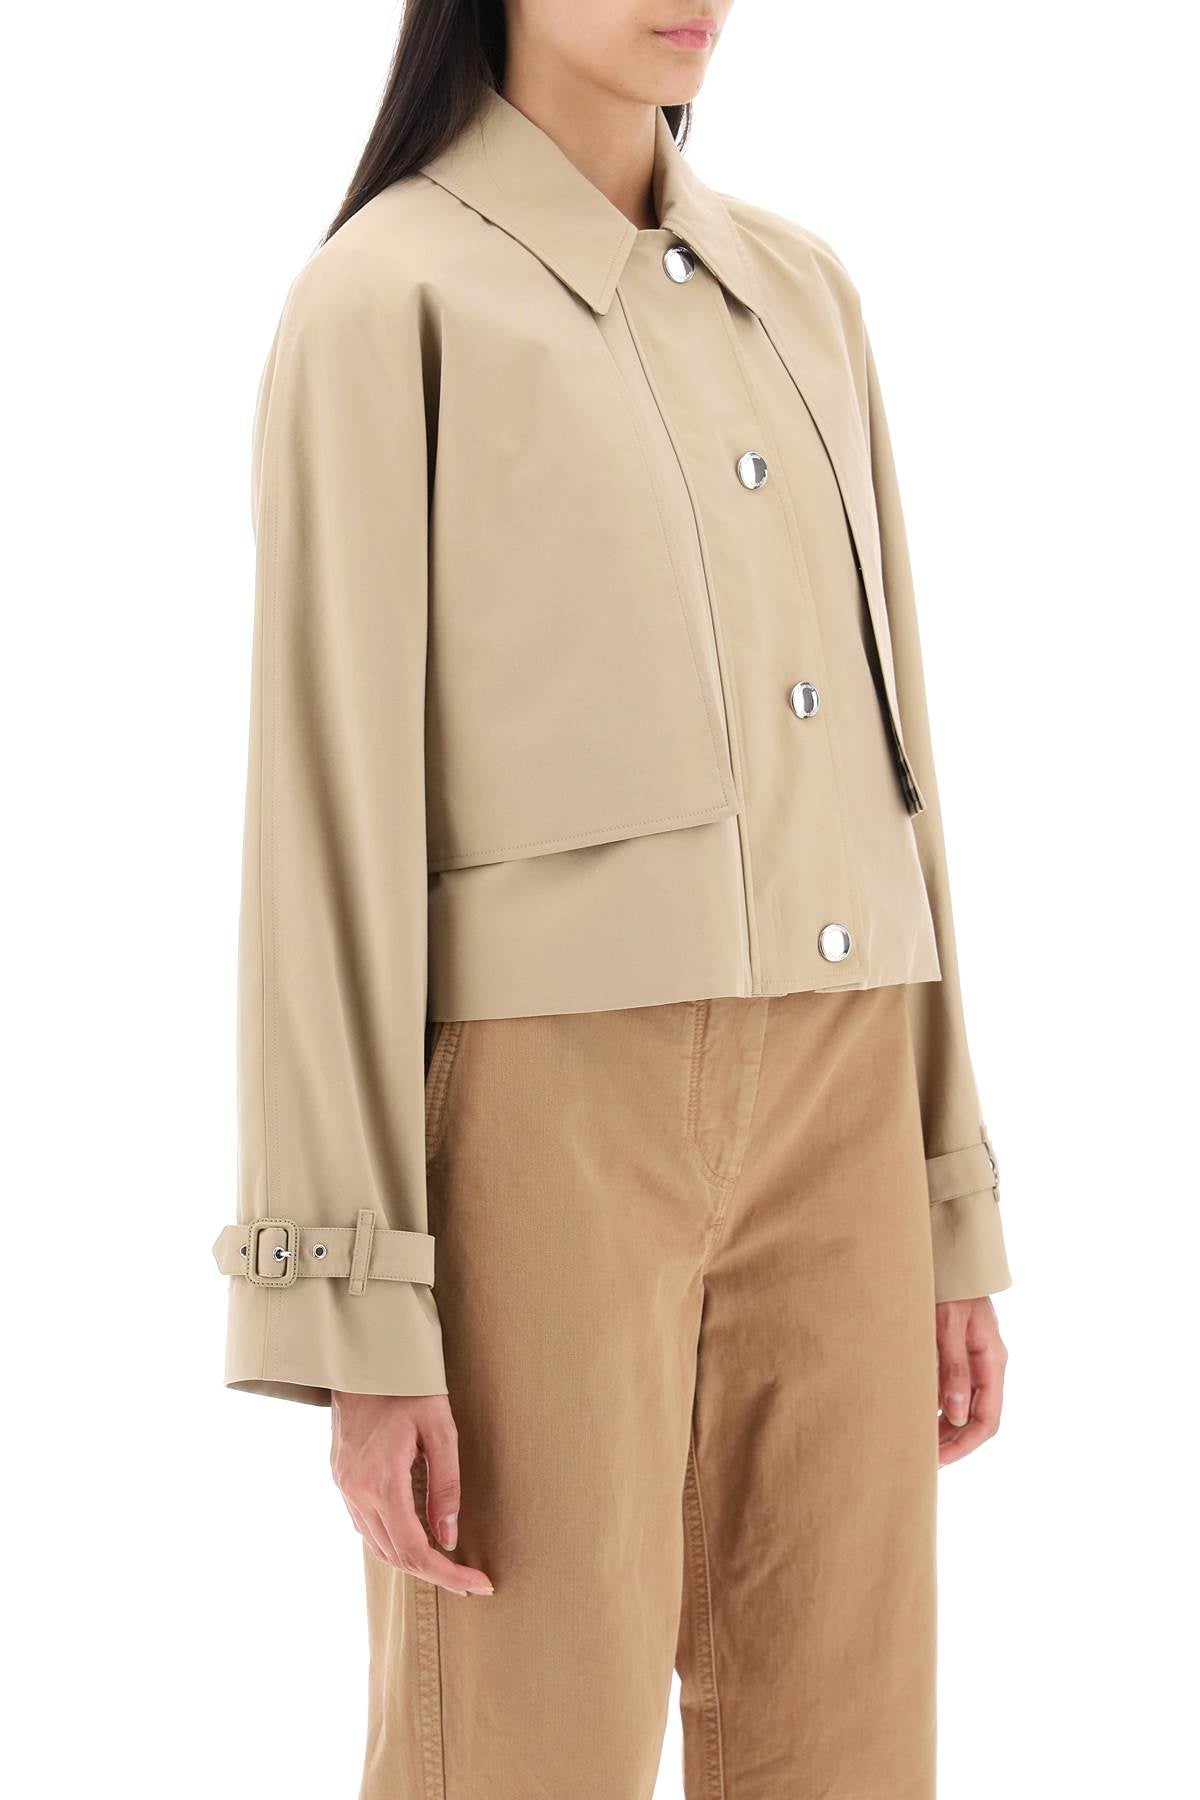 Shop Burberry Vintage-inspired Beige Cropped Jacket For Women